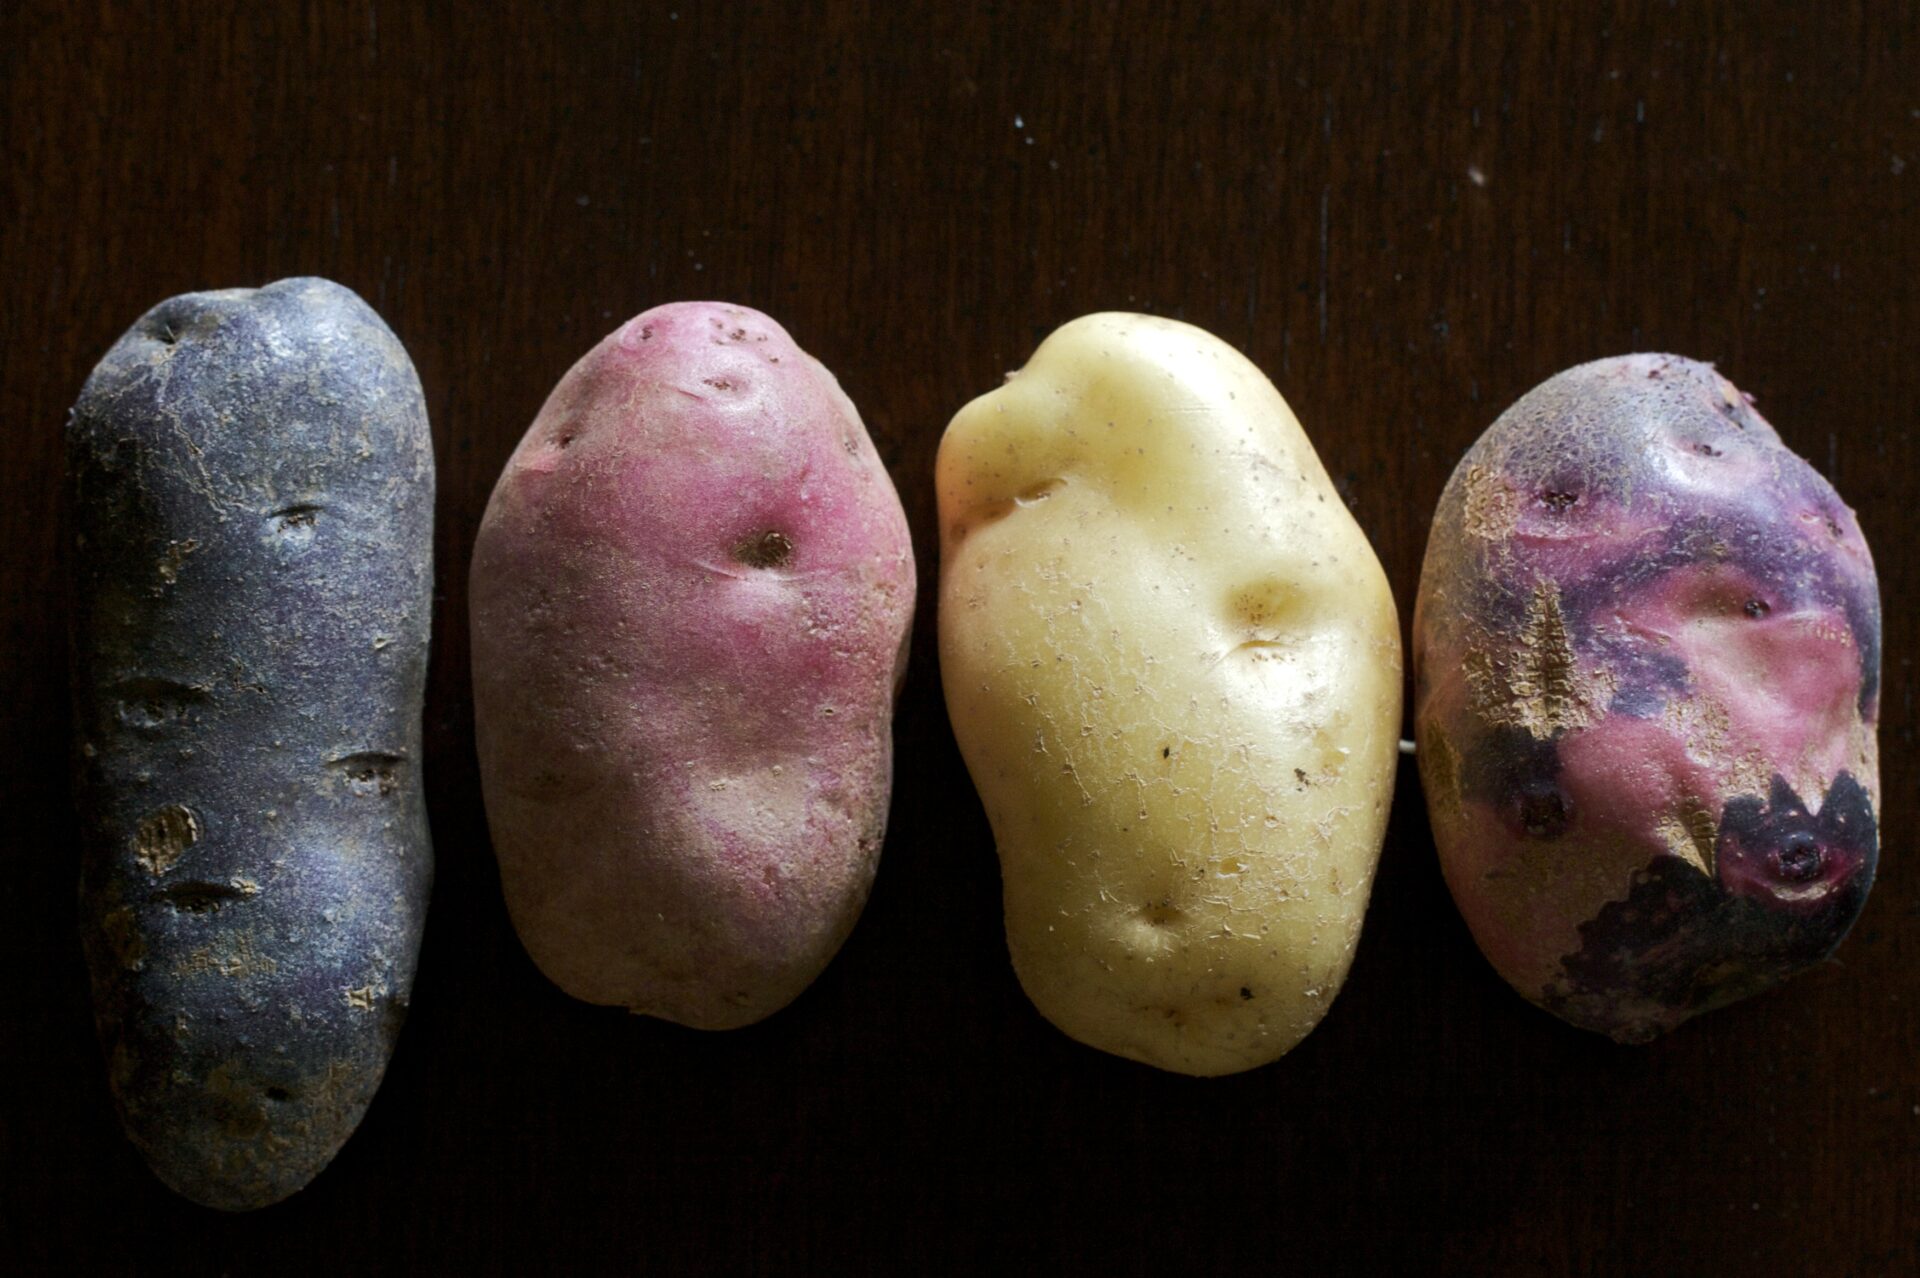 New Potatoes & Peas - An Affair from the Heart